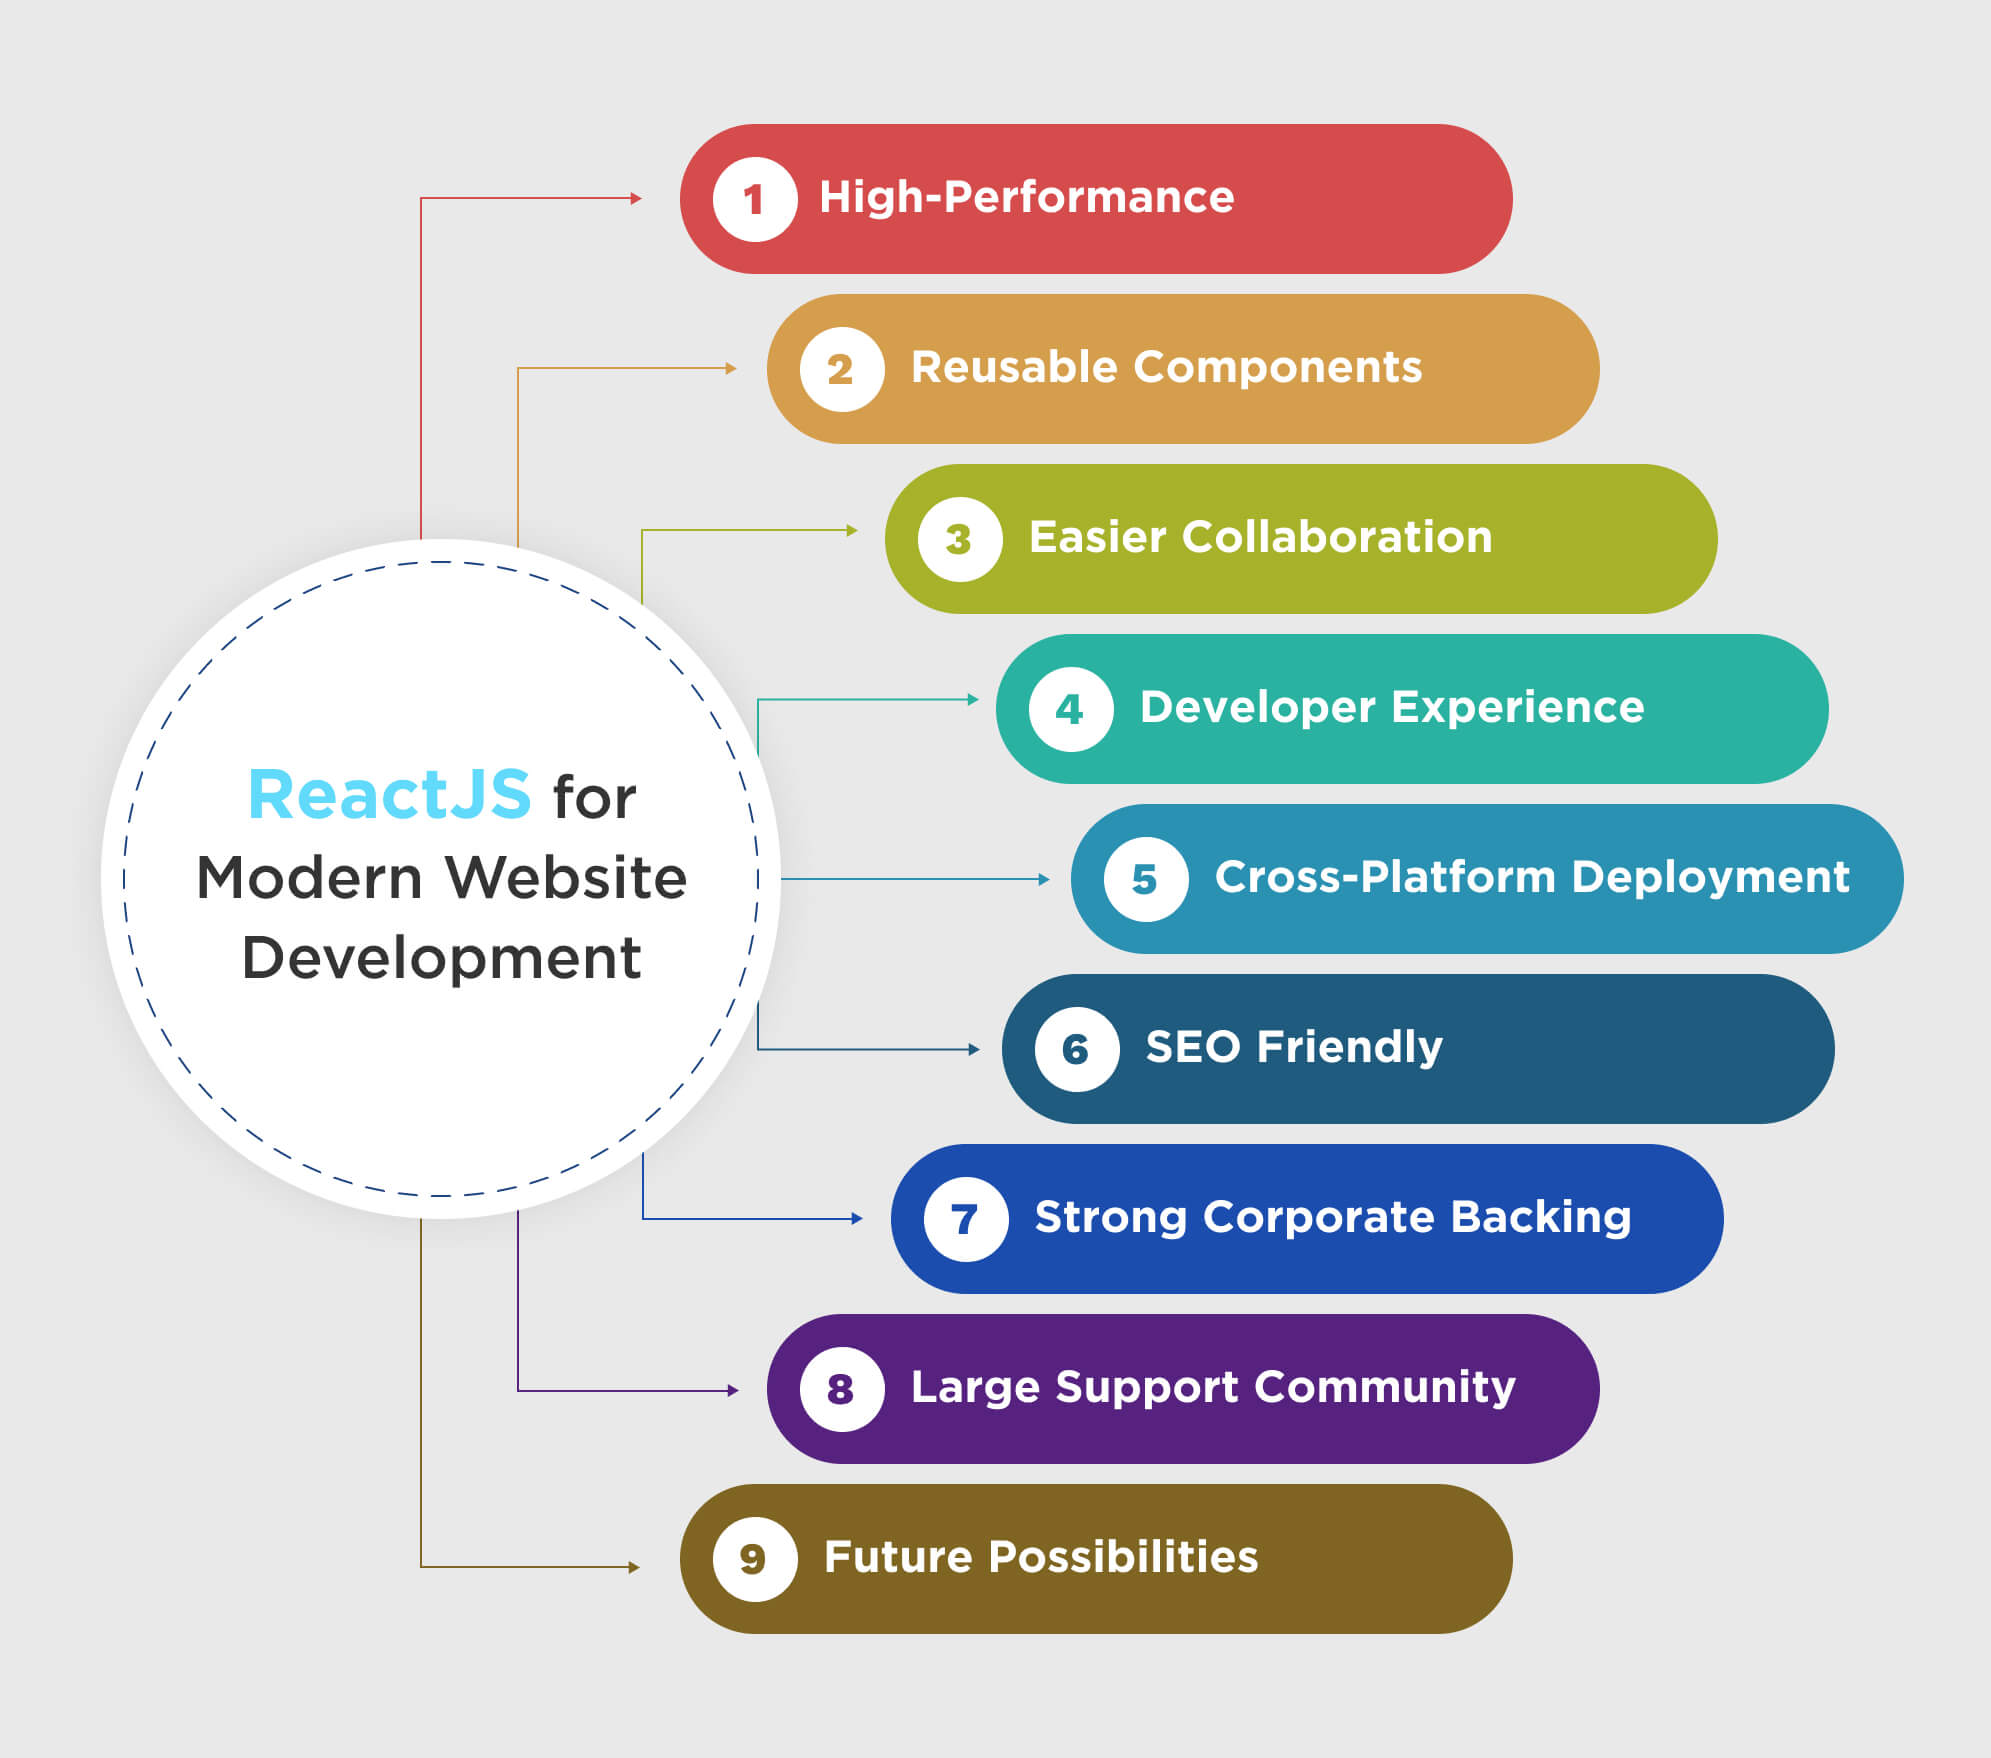 ReactJS for Modern Website Development